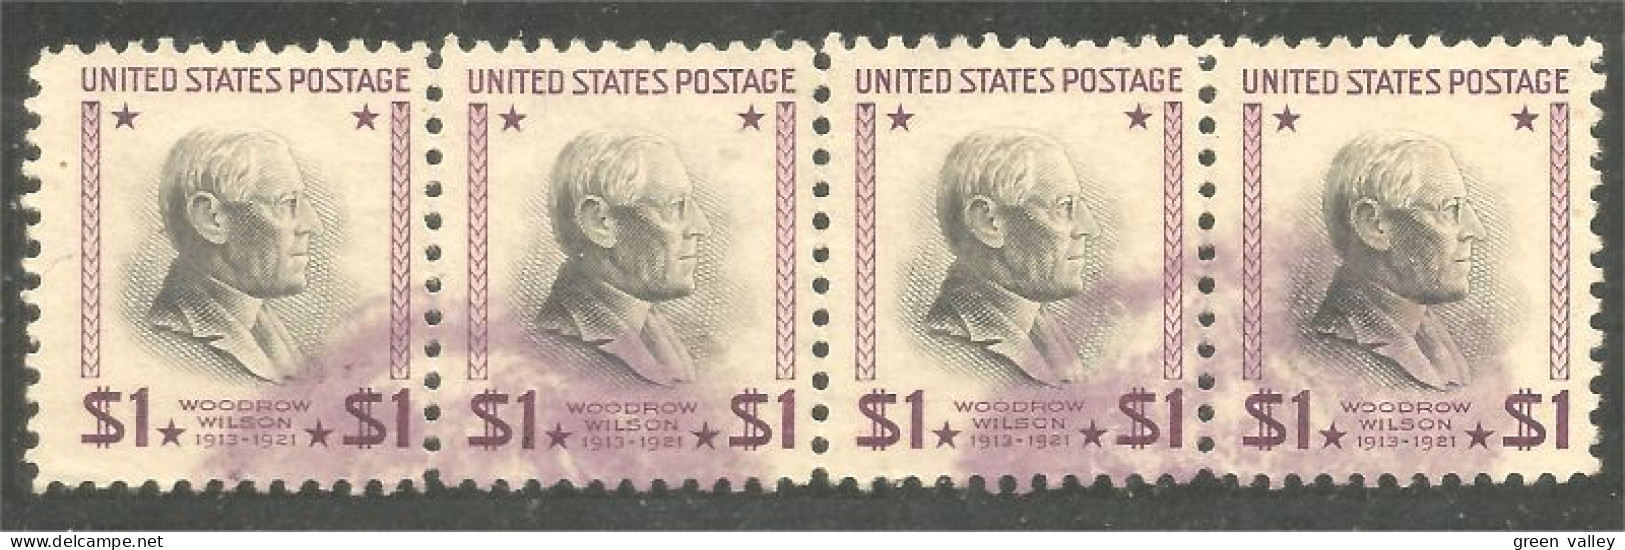 912 USA $1 Woodrow Wilson Dollar Strip Of 4 Stamps (USA-468) - Gebruikt